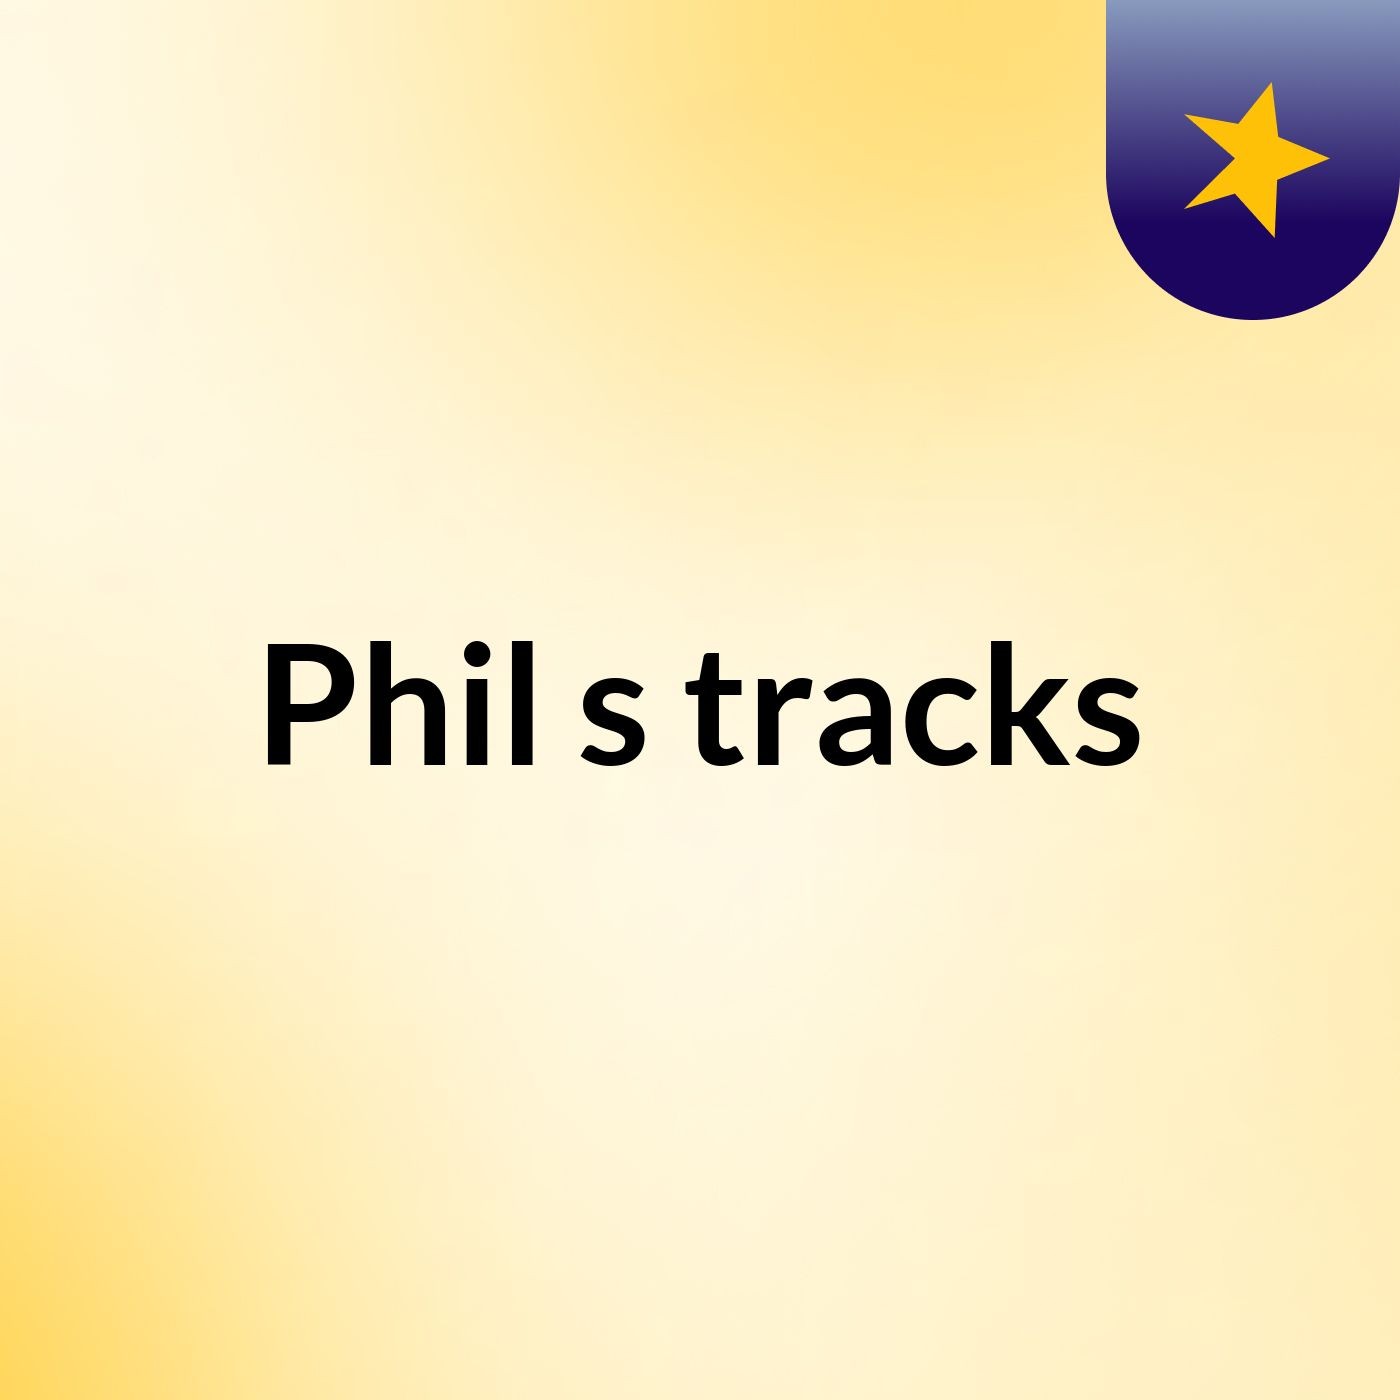 Phil's tracks